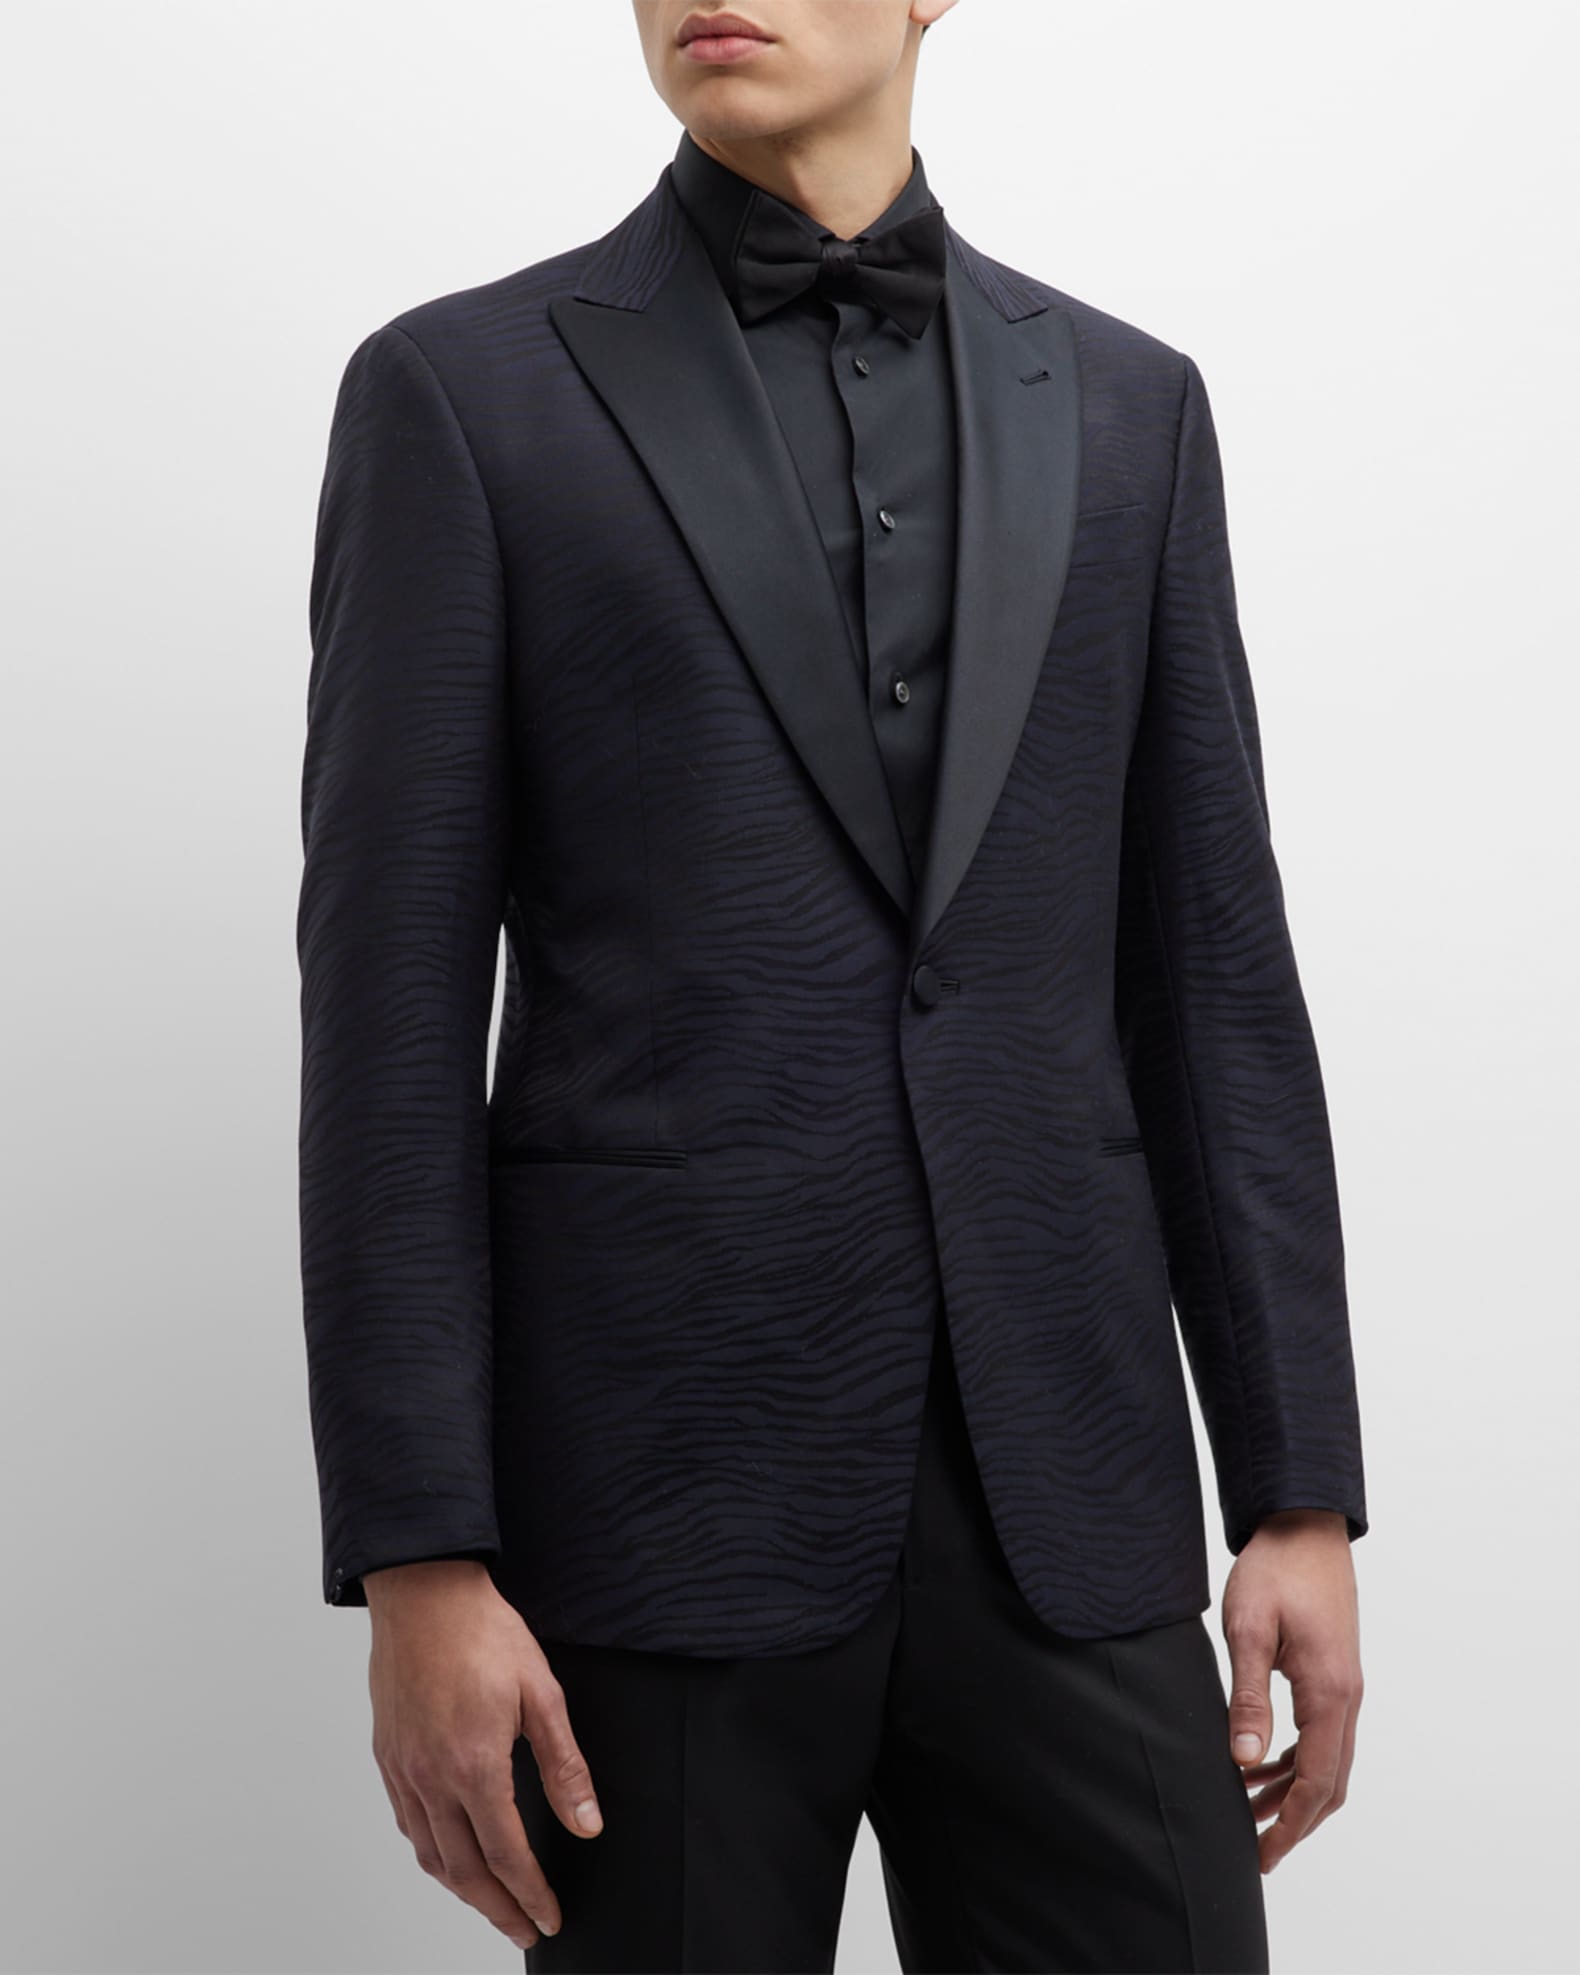 Giorgio Armani Men's Patterned Wool-Blend Dinner Jacket | Neiman Marcus